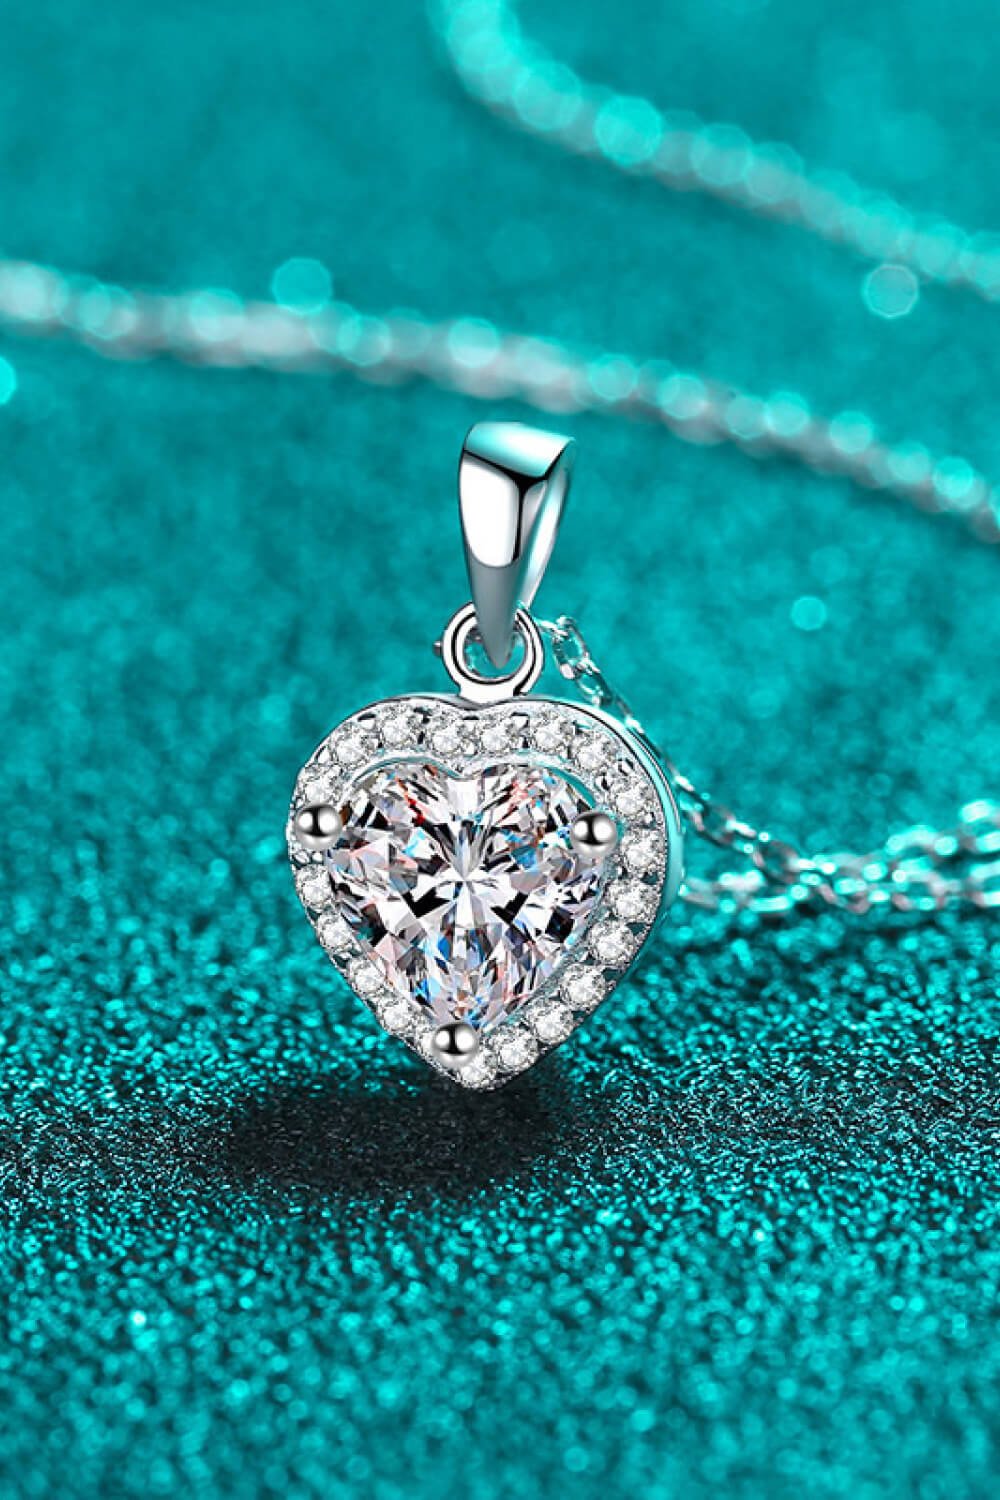 1 Carat Moissanite Heart Pendant Chain Necklace - PINKCOLADA-FINE JEWELRY-100100253378089